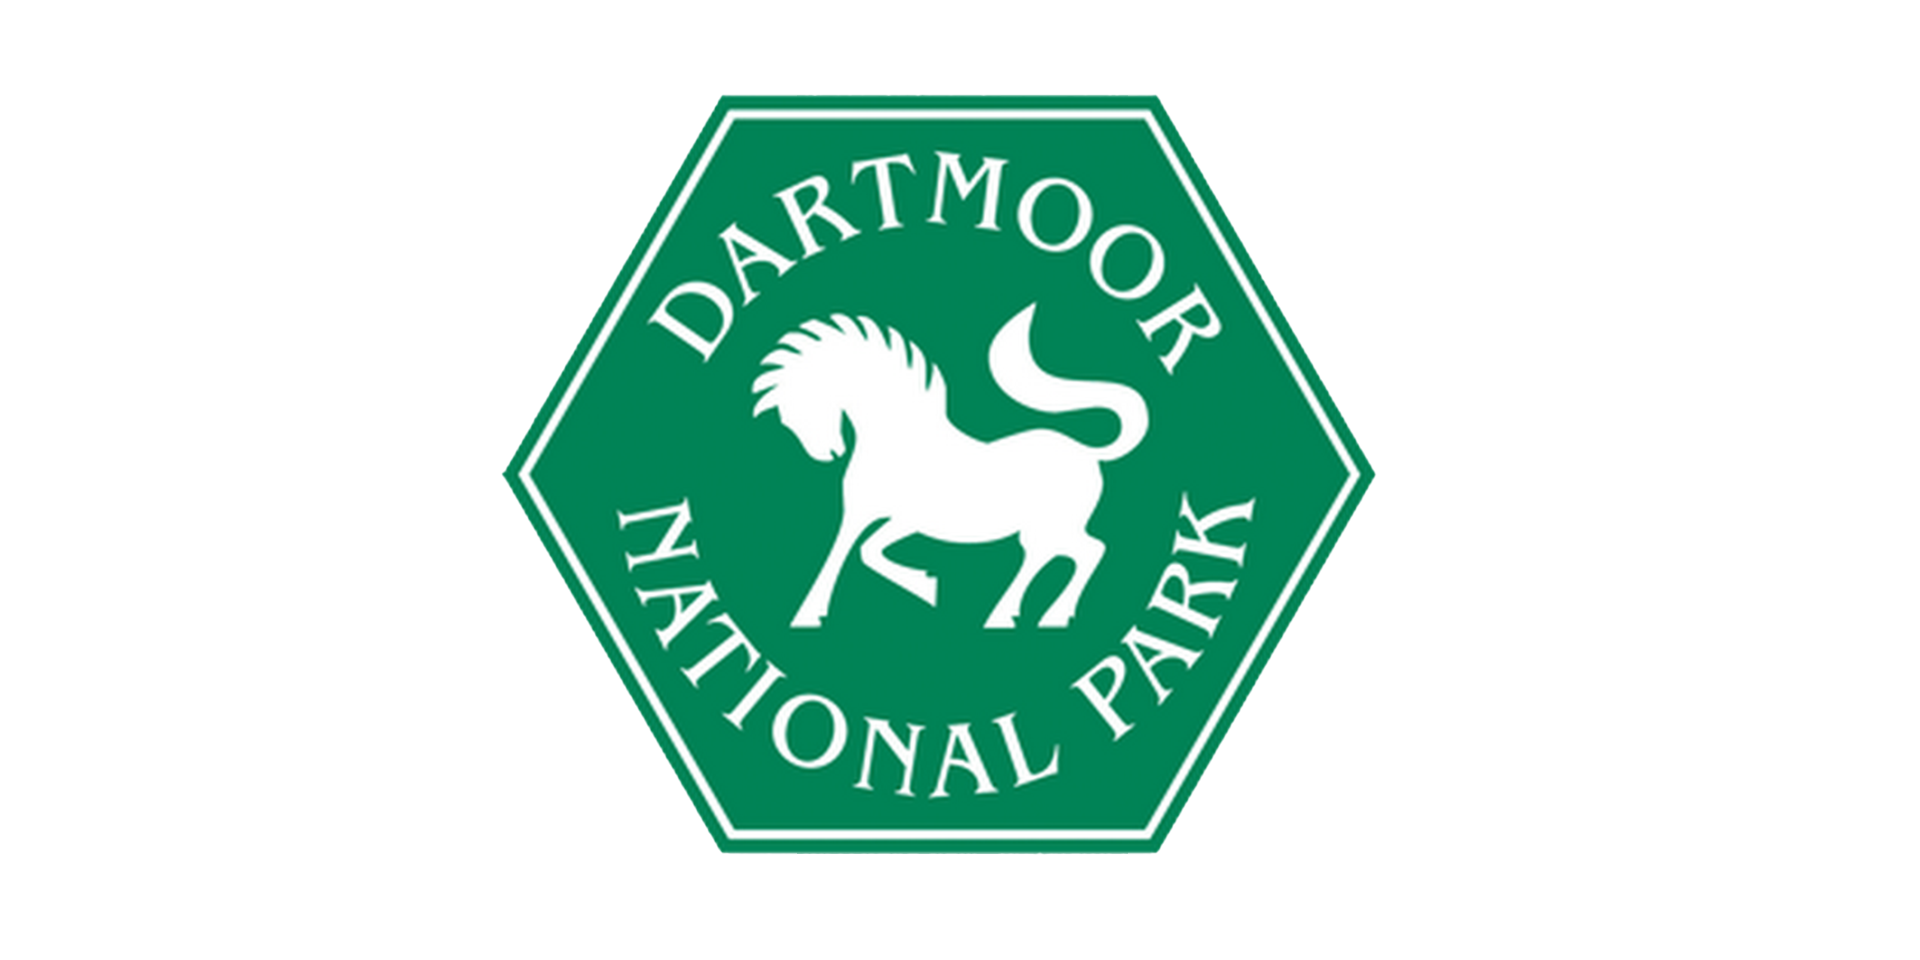 Dartmoor National Park logo 